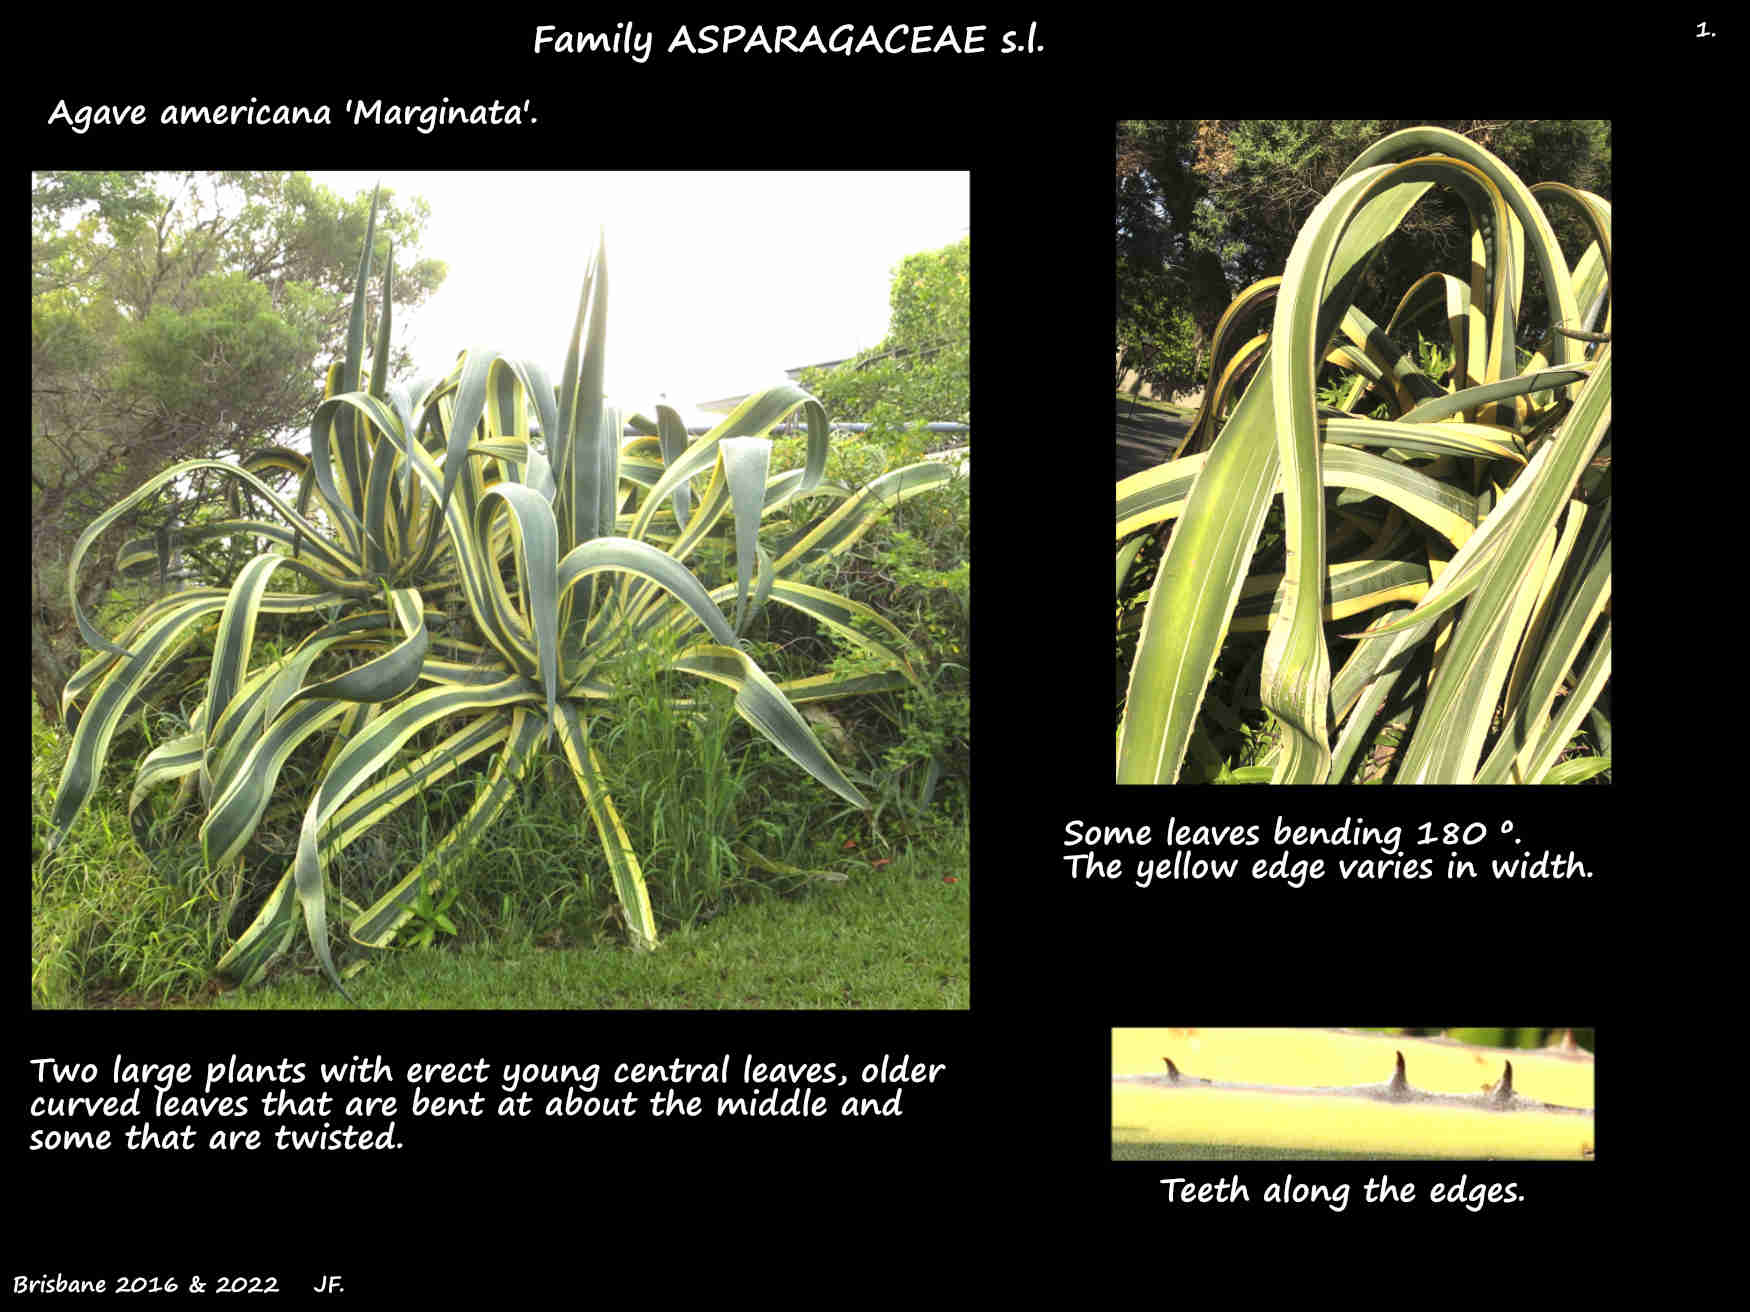 1a Two large Agave americana 'Marginata' plants